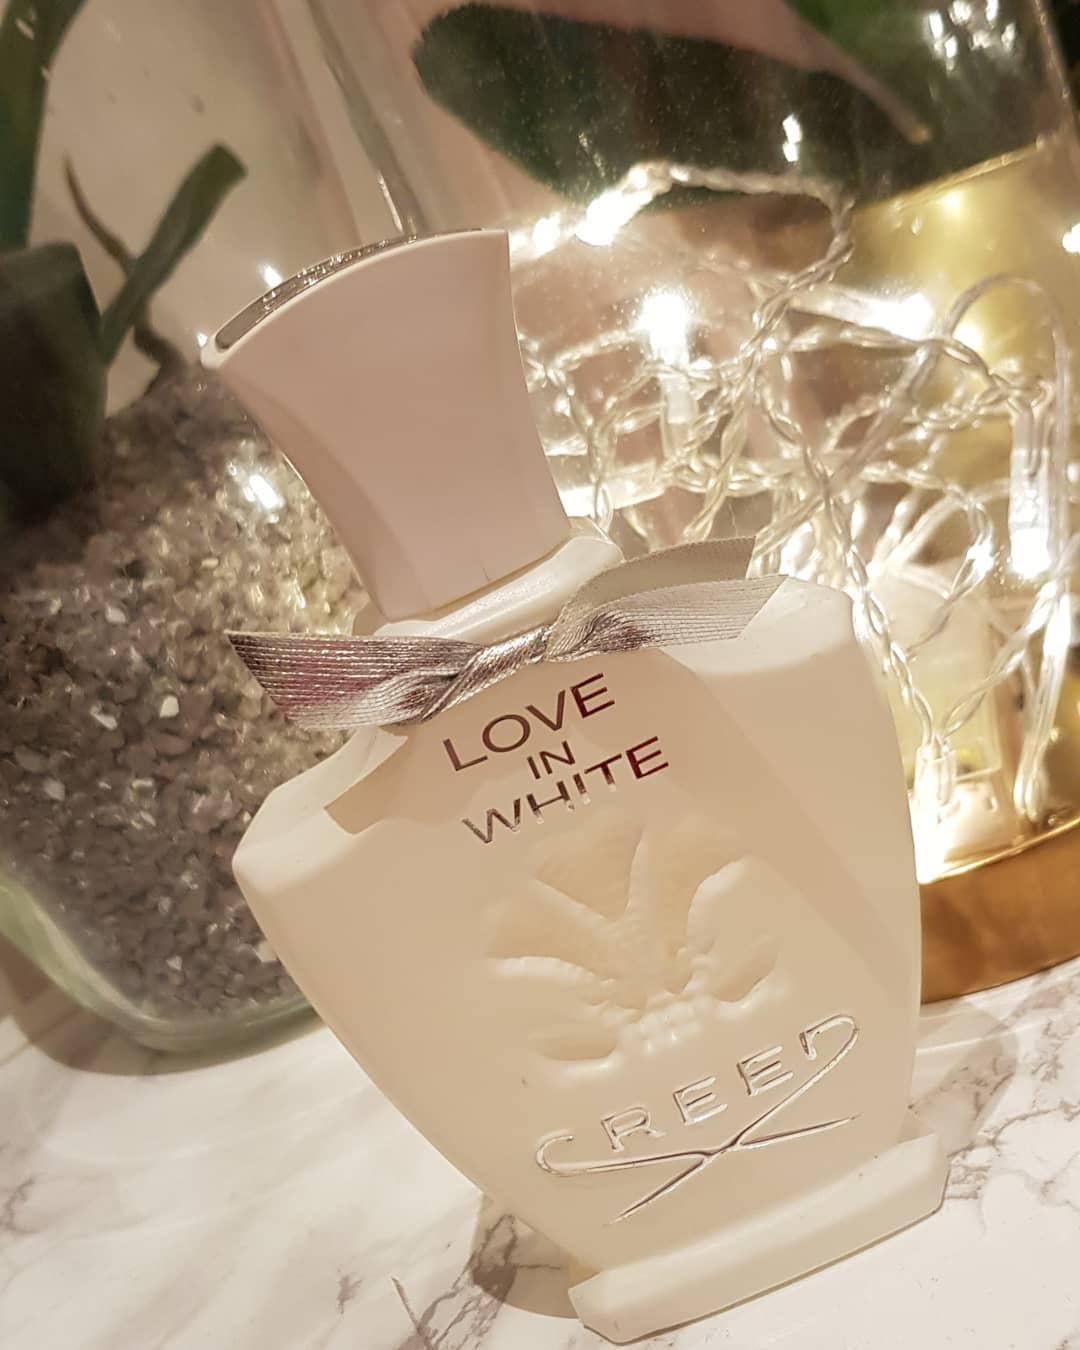 Nước hoa Creed love in white for women 